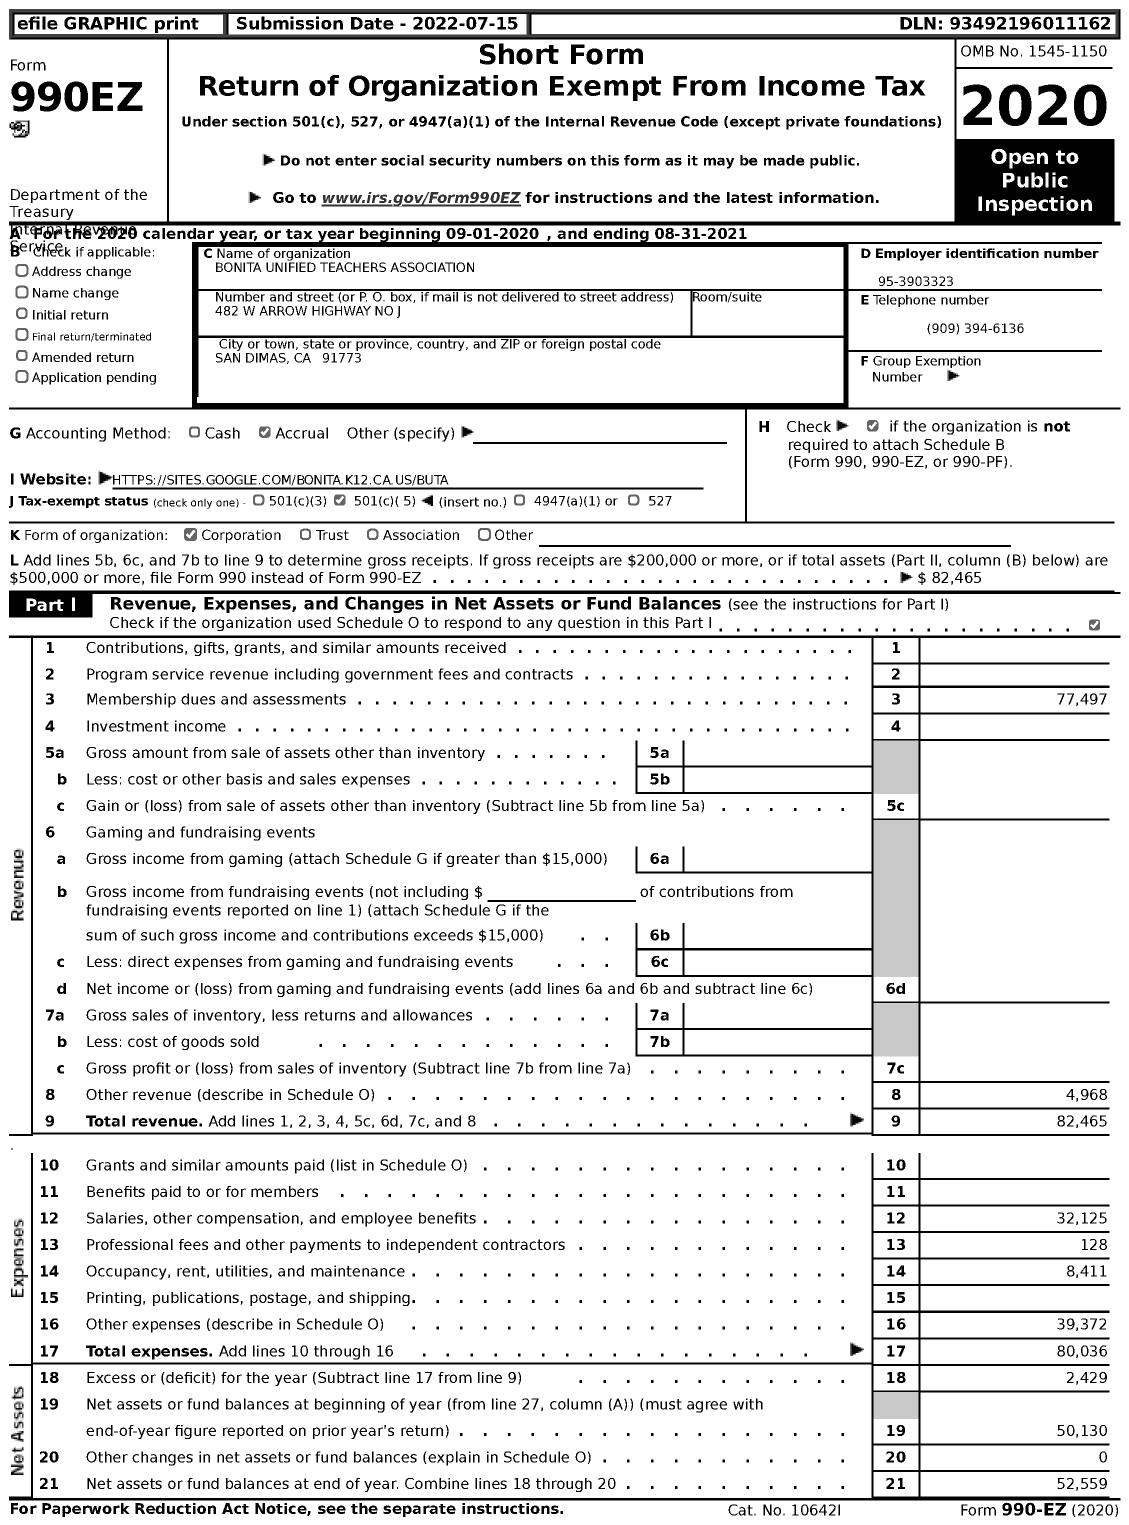 Image of first page of 2020 Form 990EZ for California Teachers Association - Bonita Unified Teachers Association